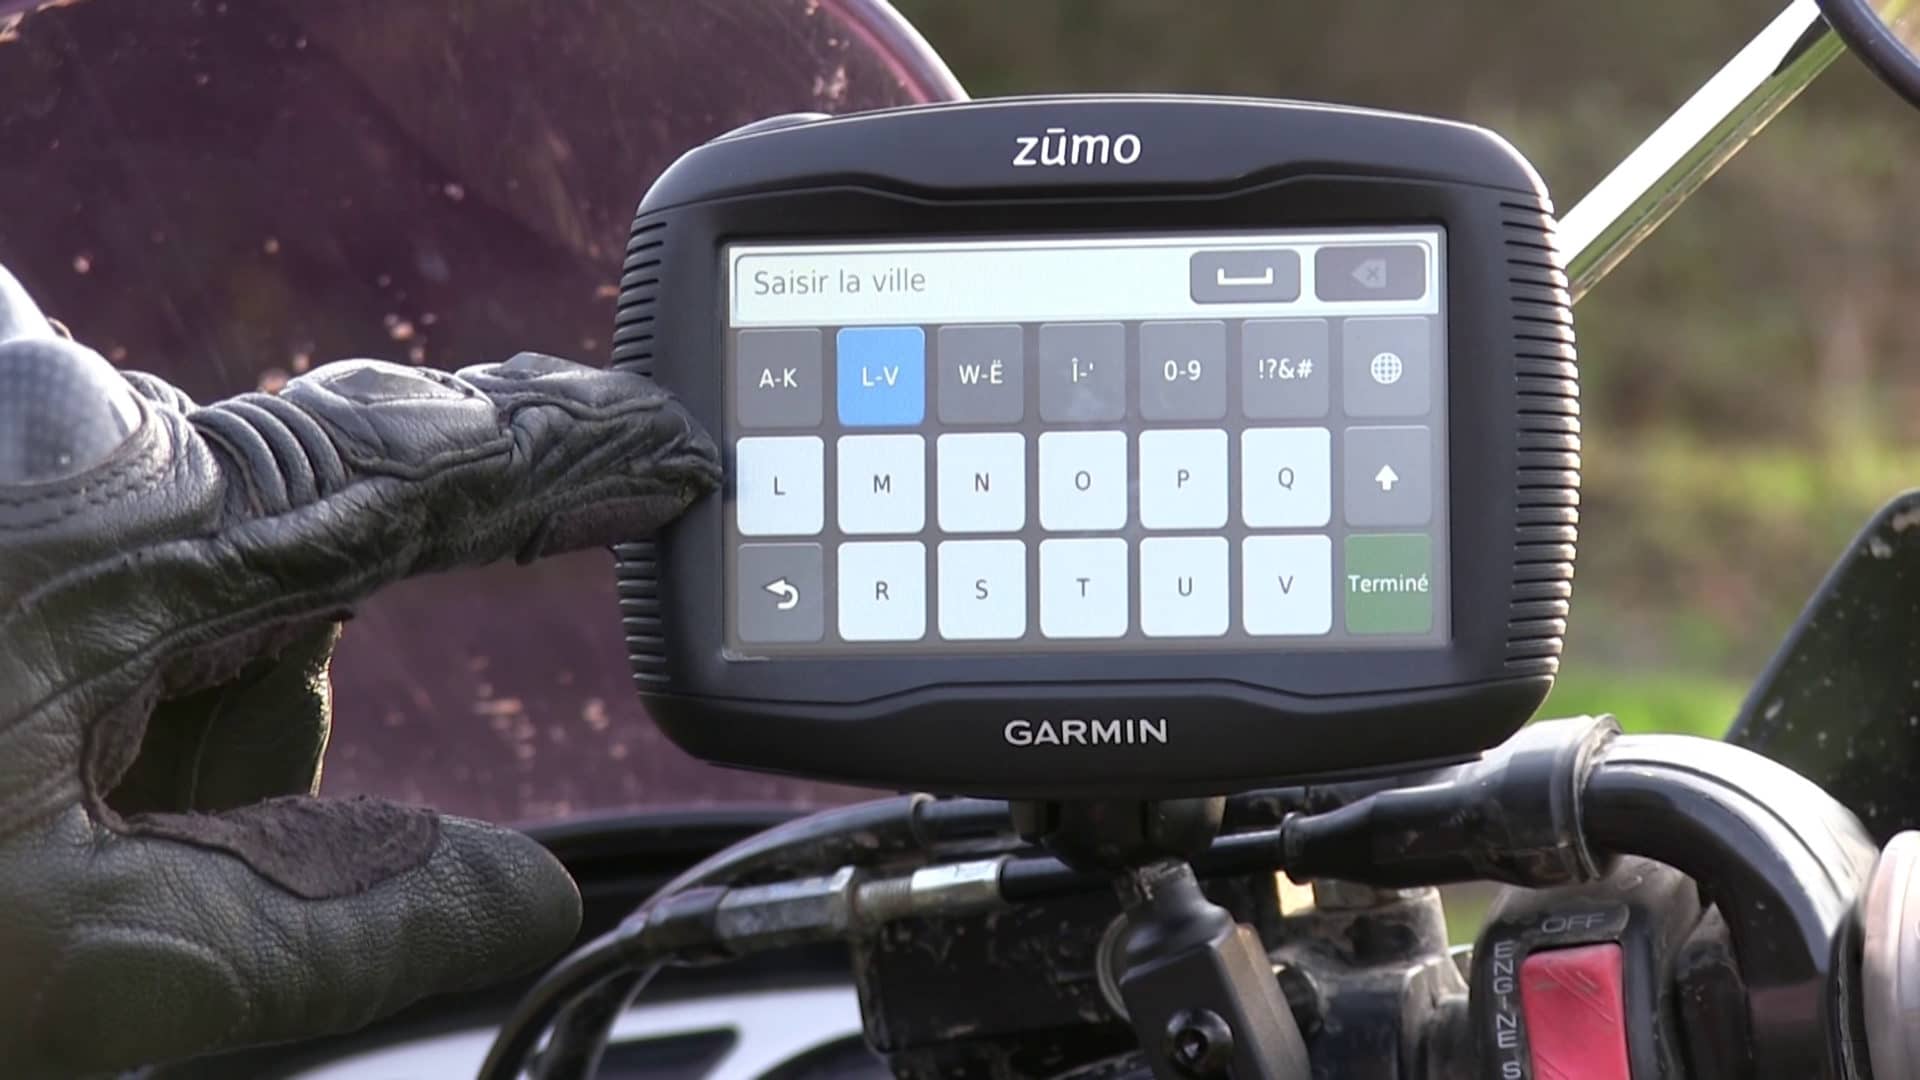 Garmin - GPS 2 roues (Moto & Scooter) ZUMO 340LM Europe 4,3' Carte